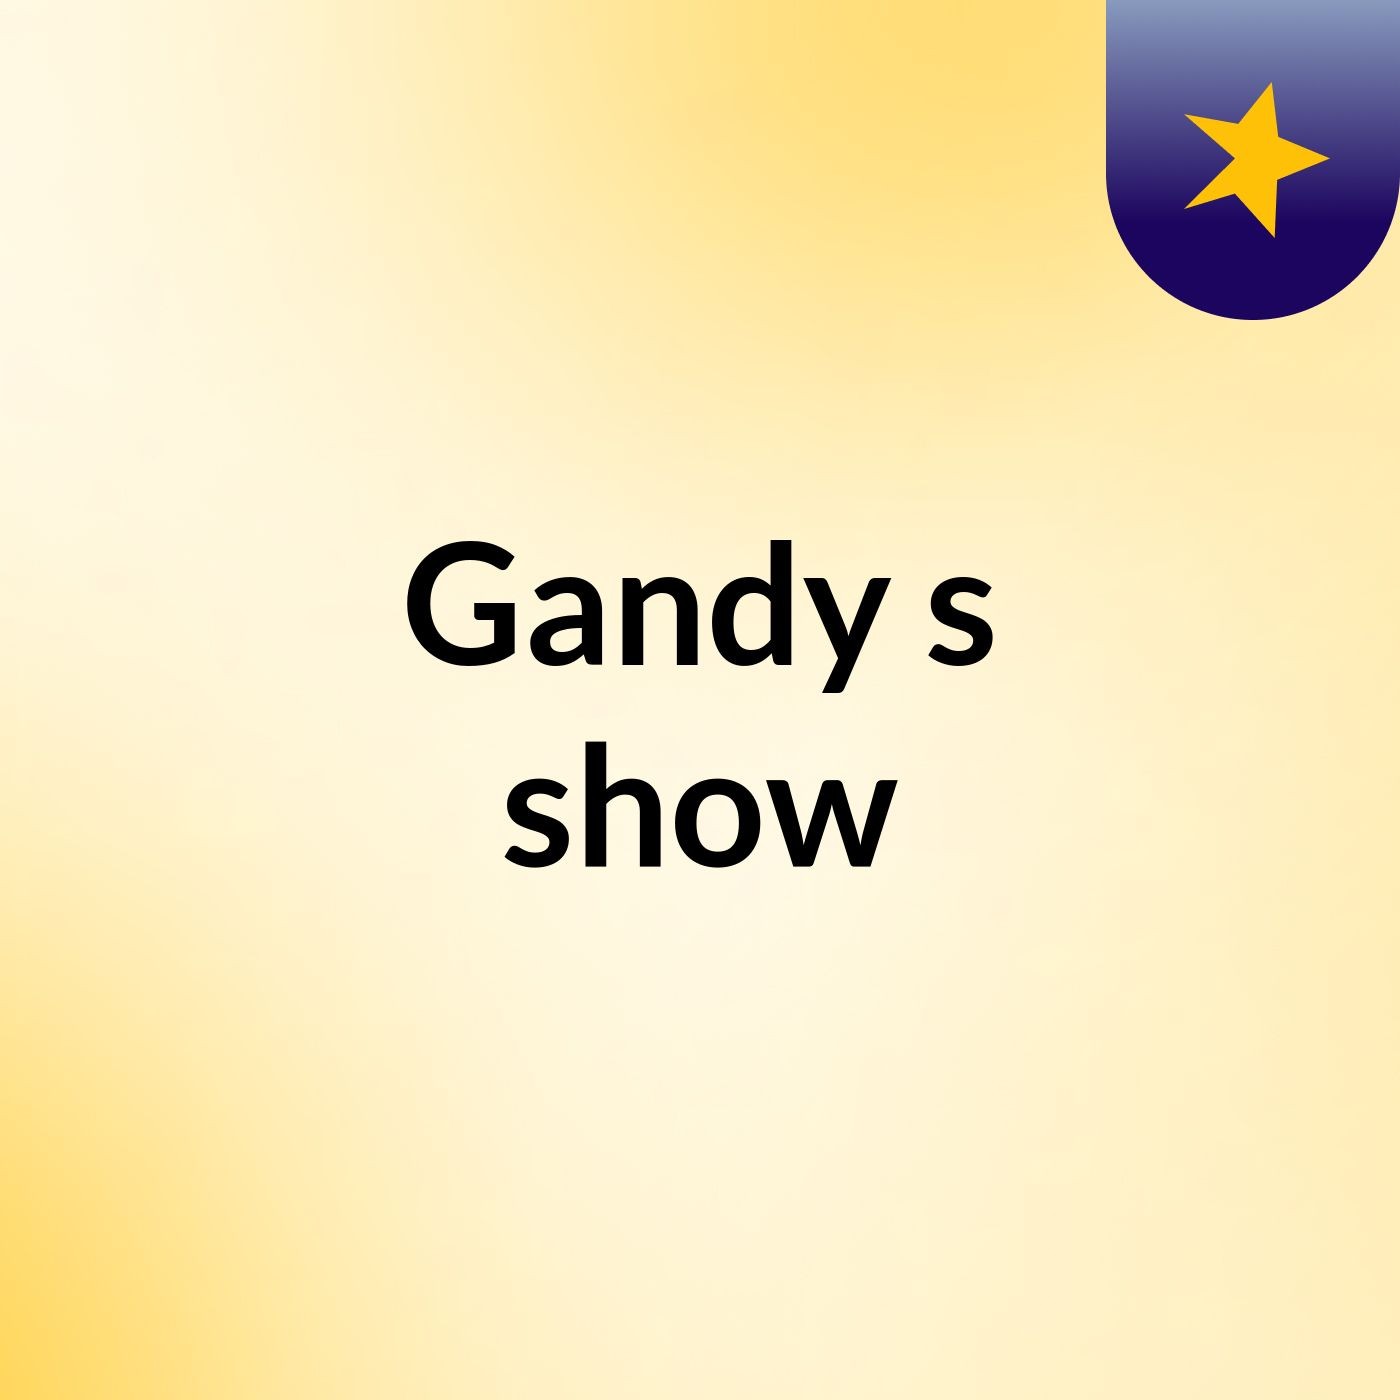 Gandy's show